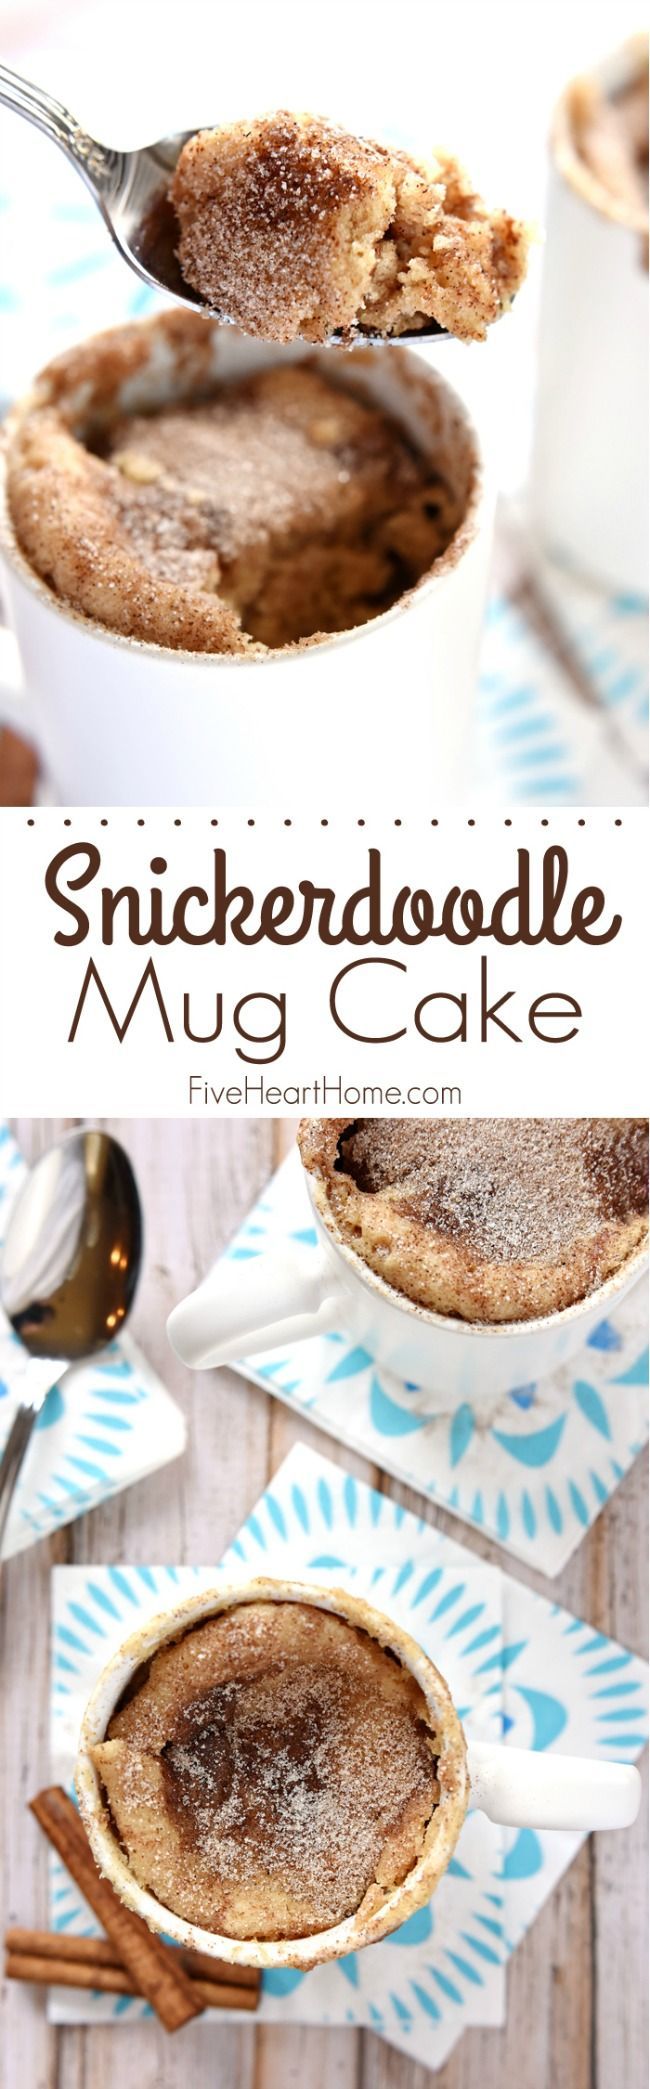 Mug cake recipes you can make in minutes!